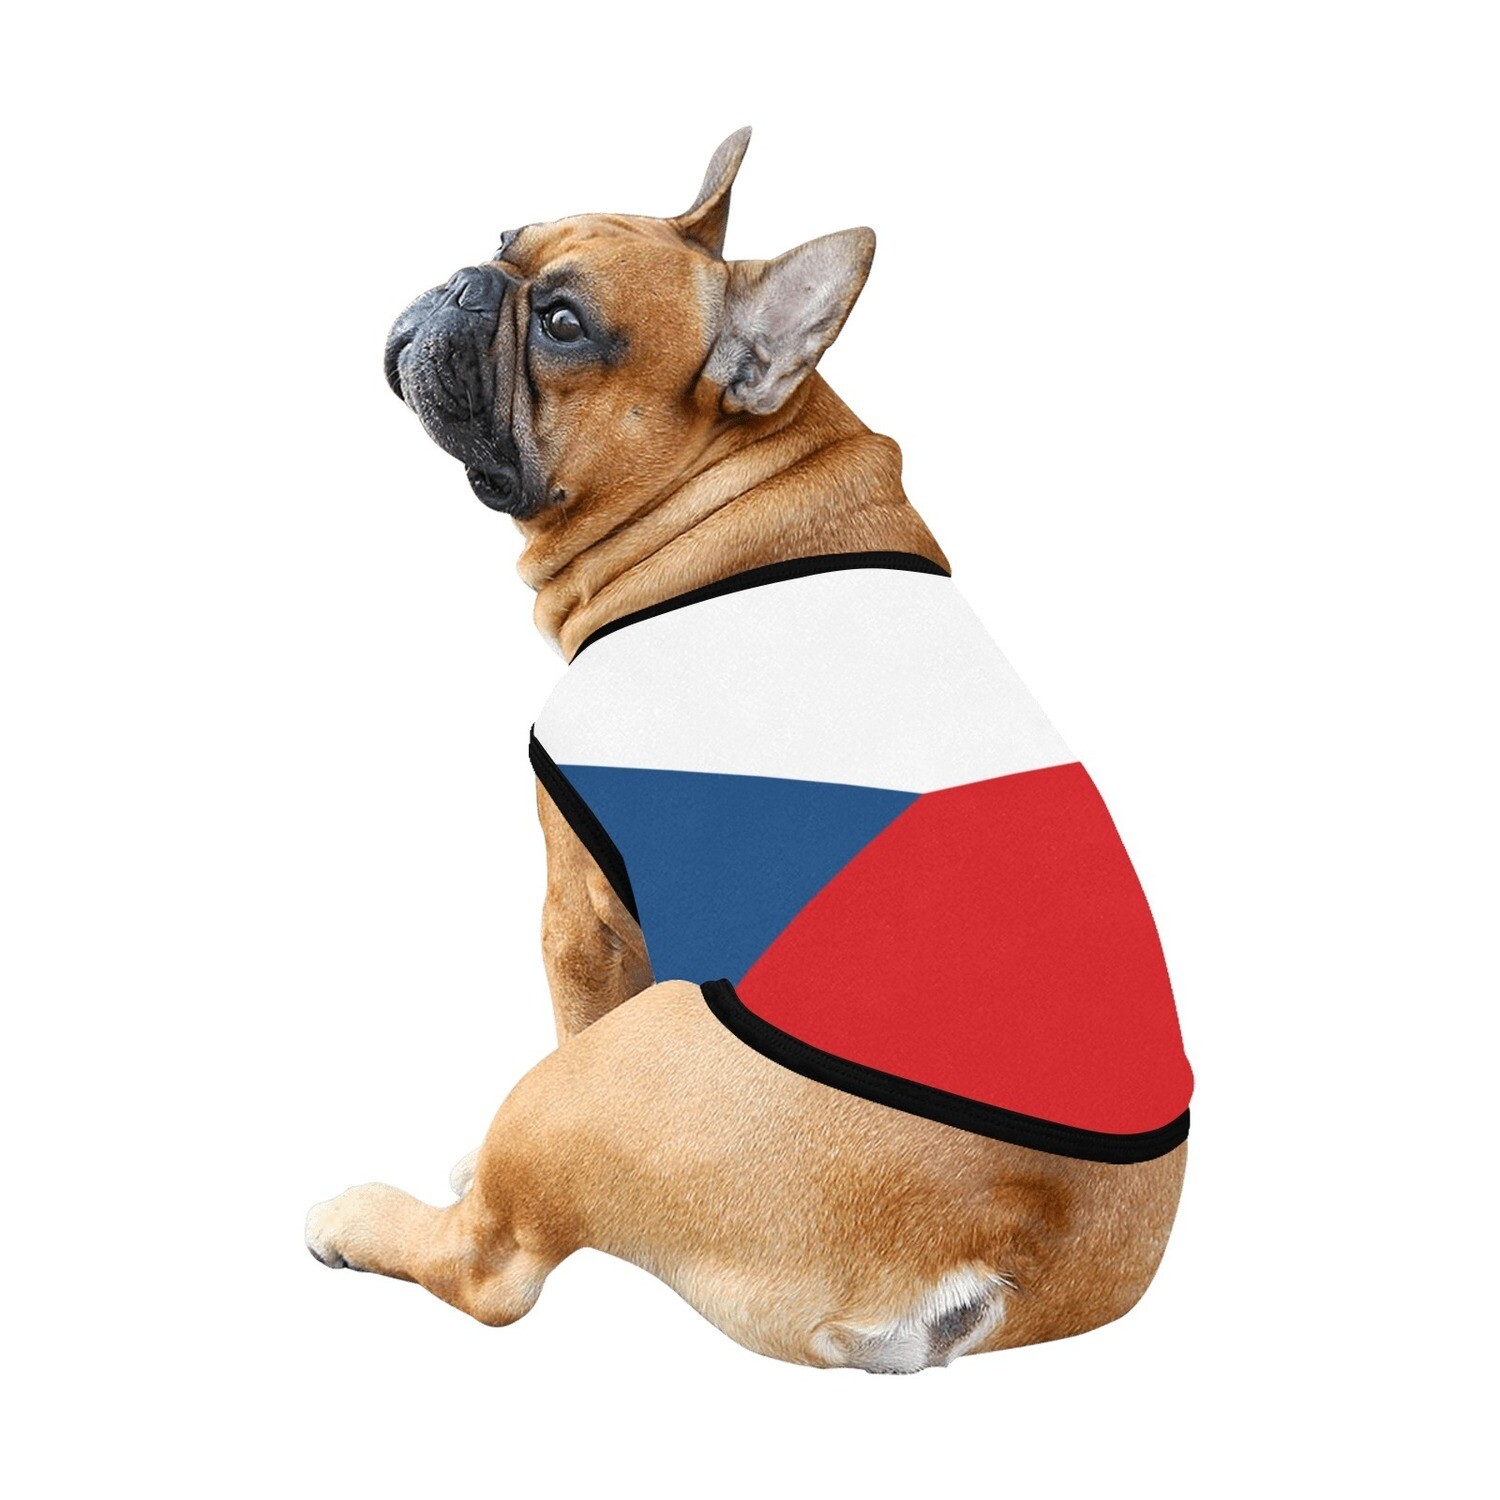 🐕🇨🇿I love Czech Republic, Big Czech flag, dog t-shirt, dog gift, dog tank top, dog shirt, dog clothes, gift, 7 sizes XS to 3XL